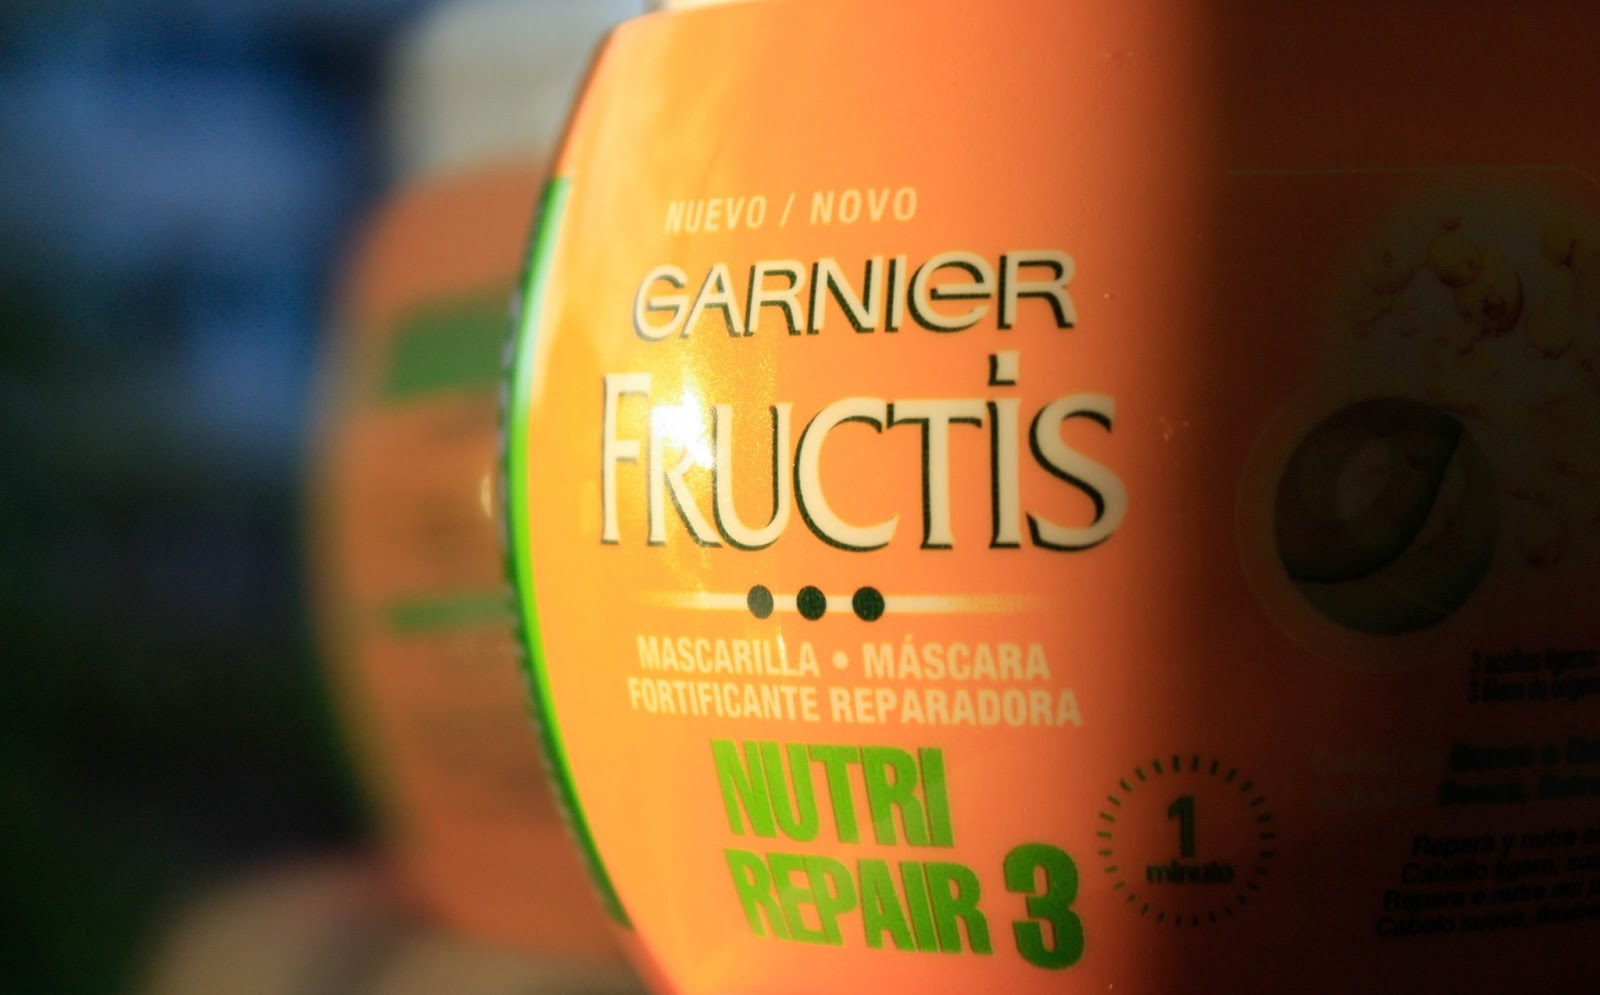 Garnier Fructis Nutri Repair 3 Mascarilla Reparadora